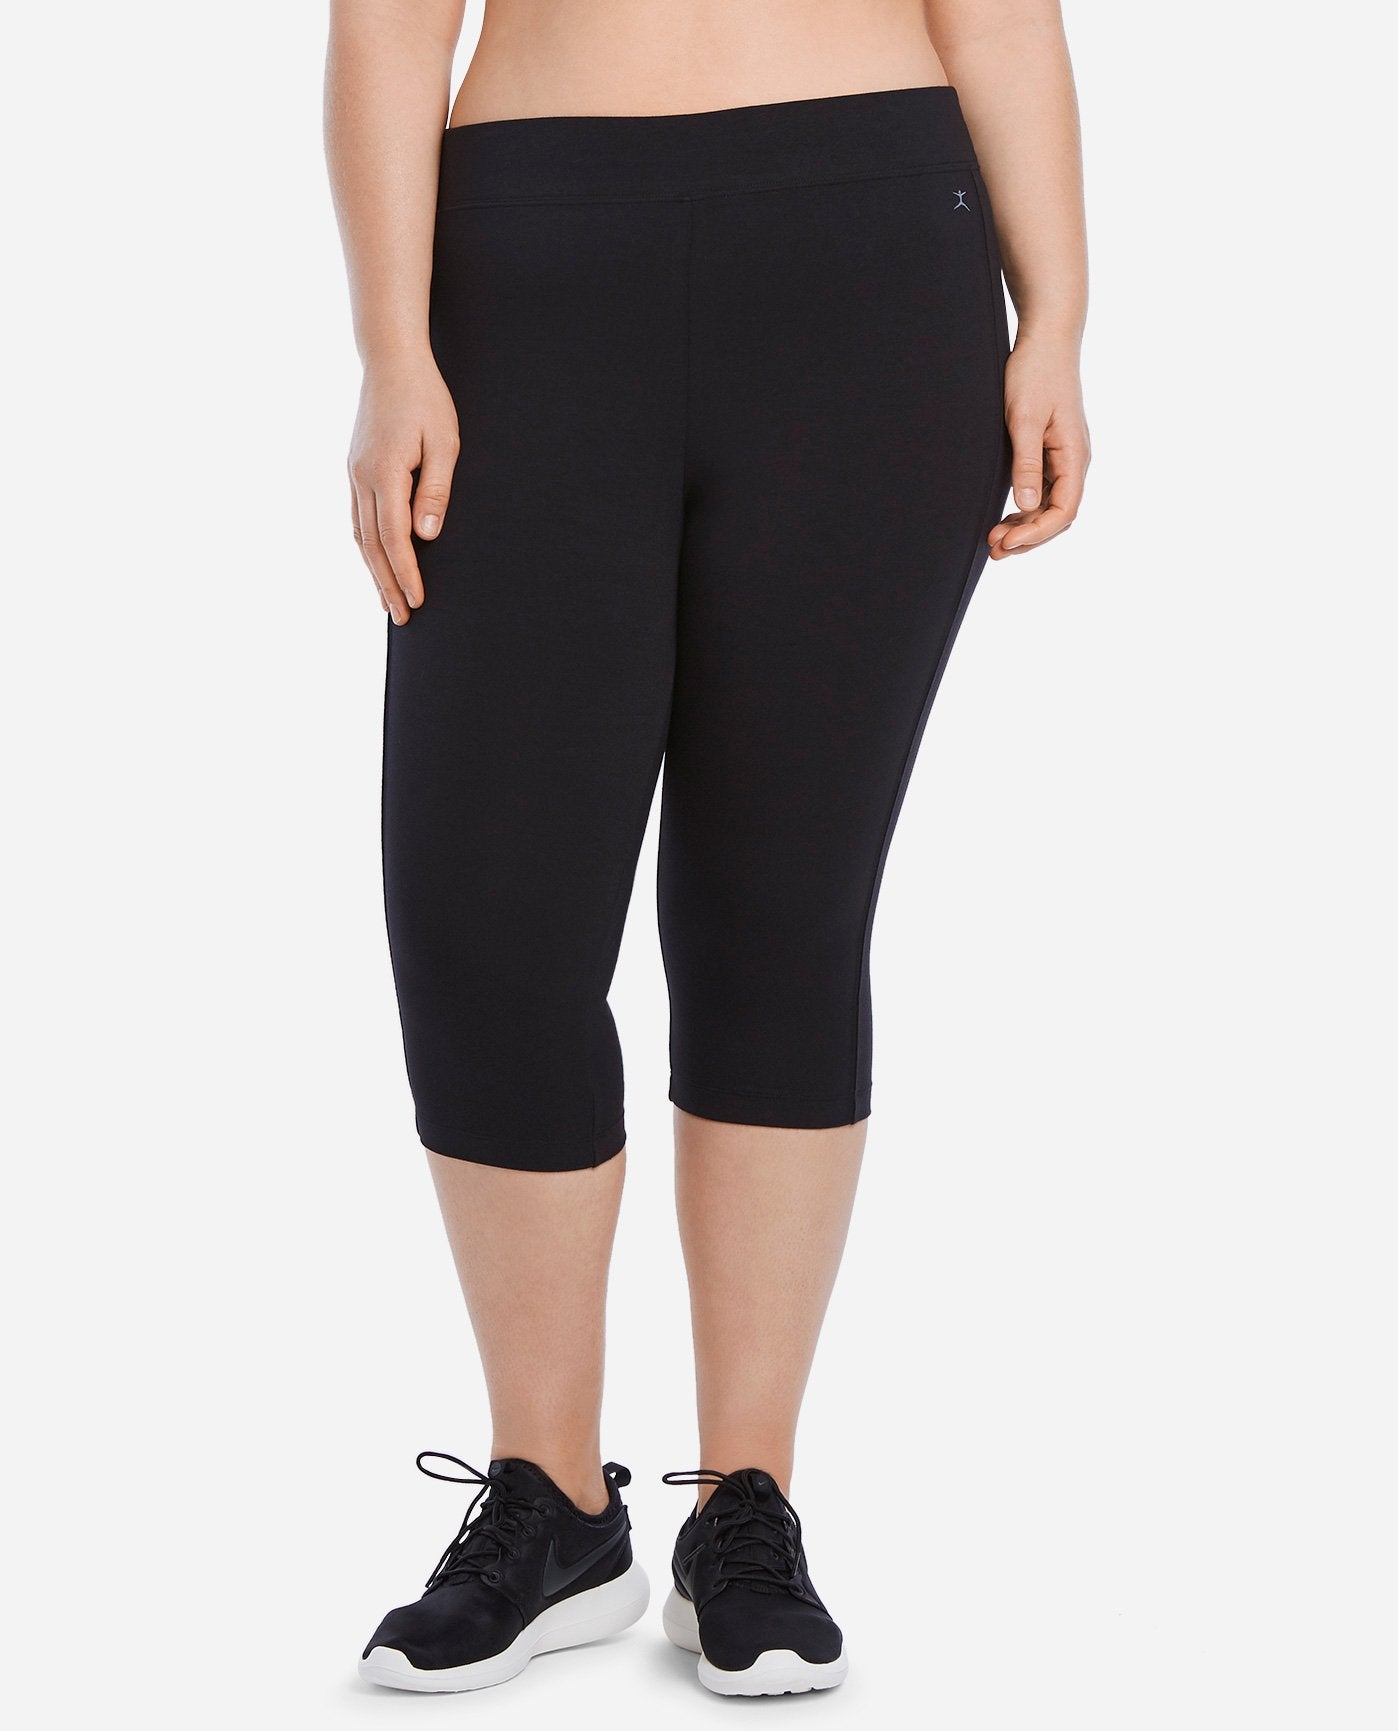 Buy Danskin Womens Sleek Fit Yoga Crop Pant Black Small at Amazonin